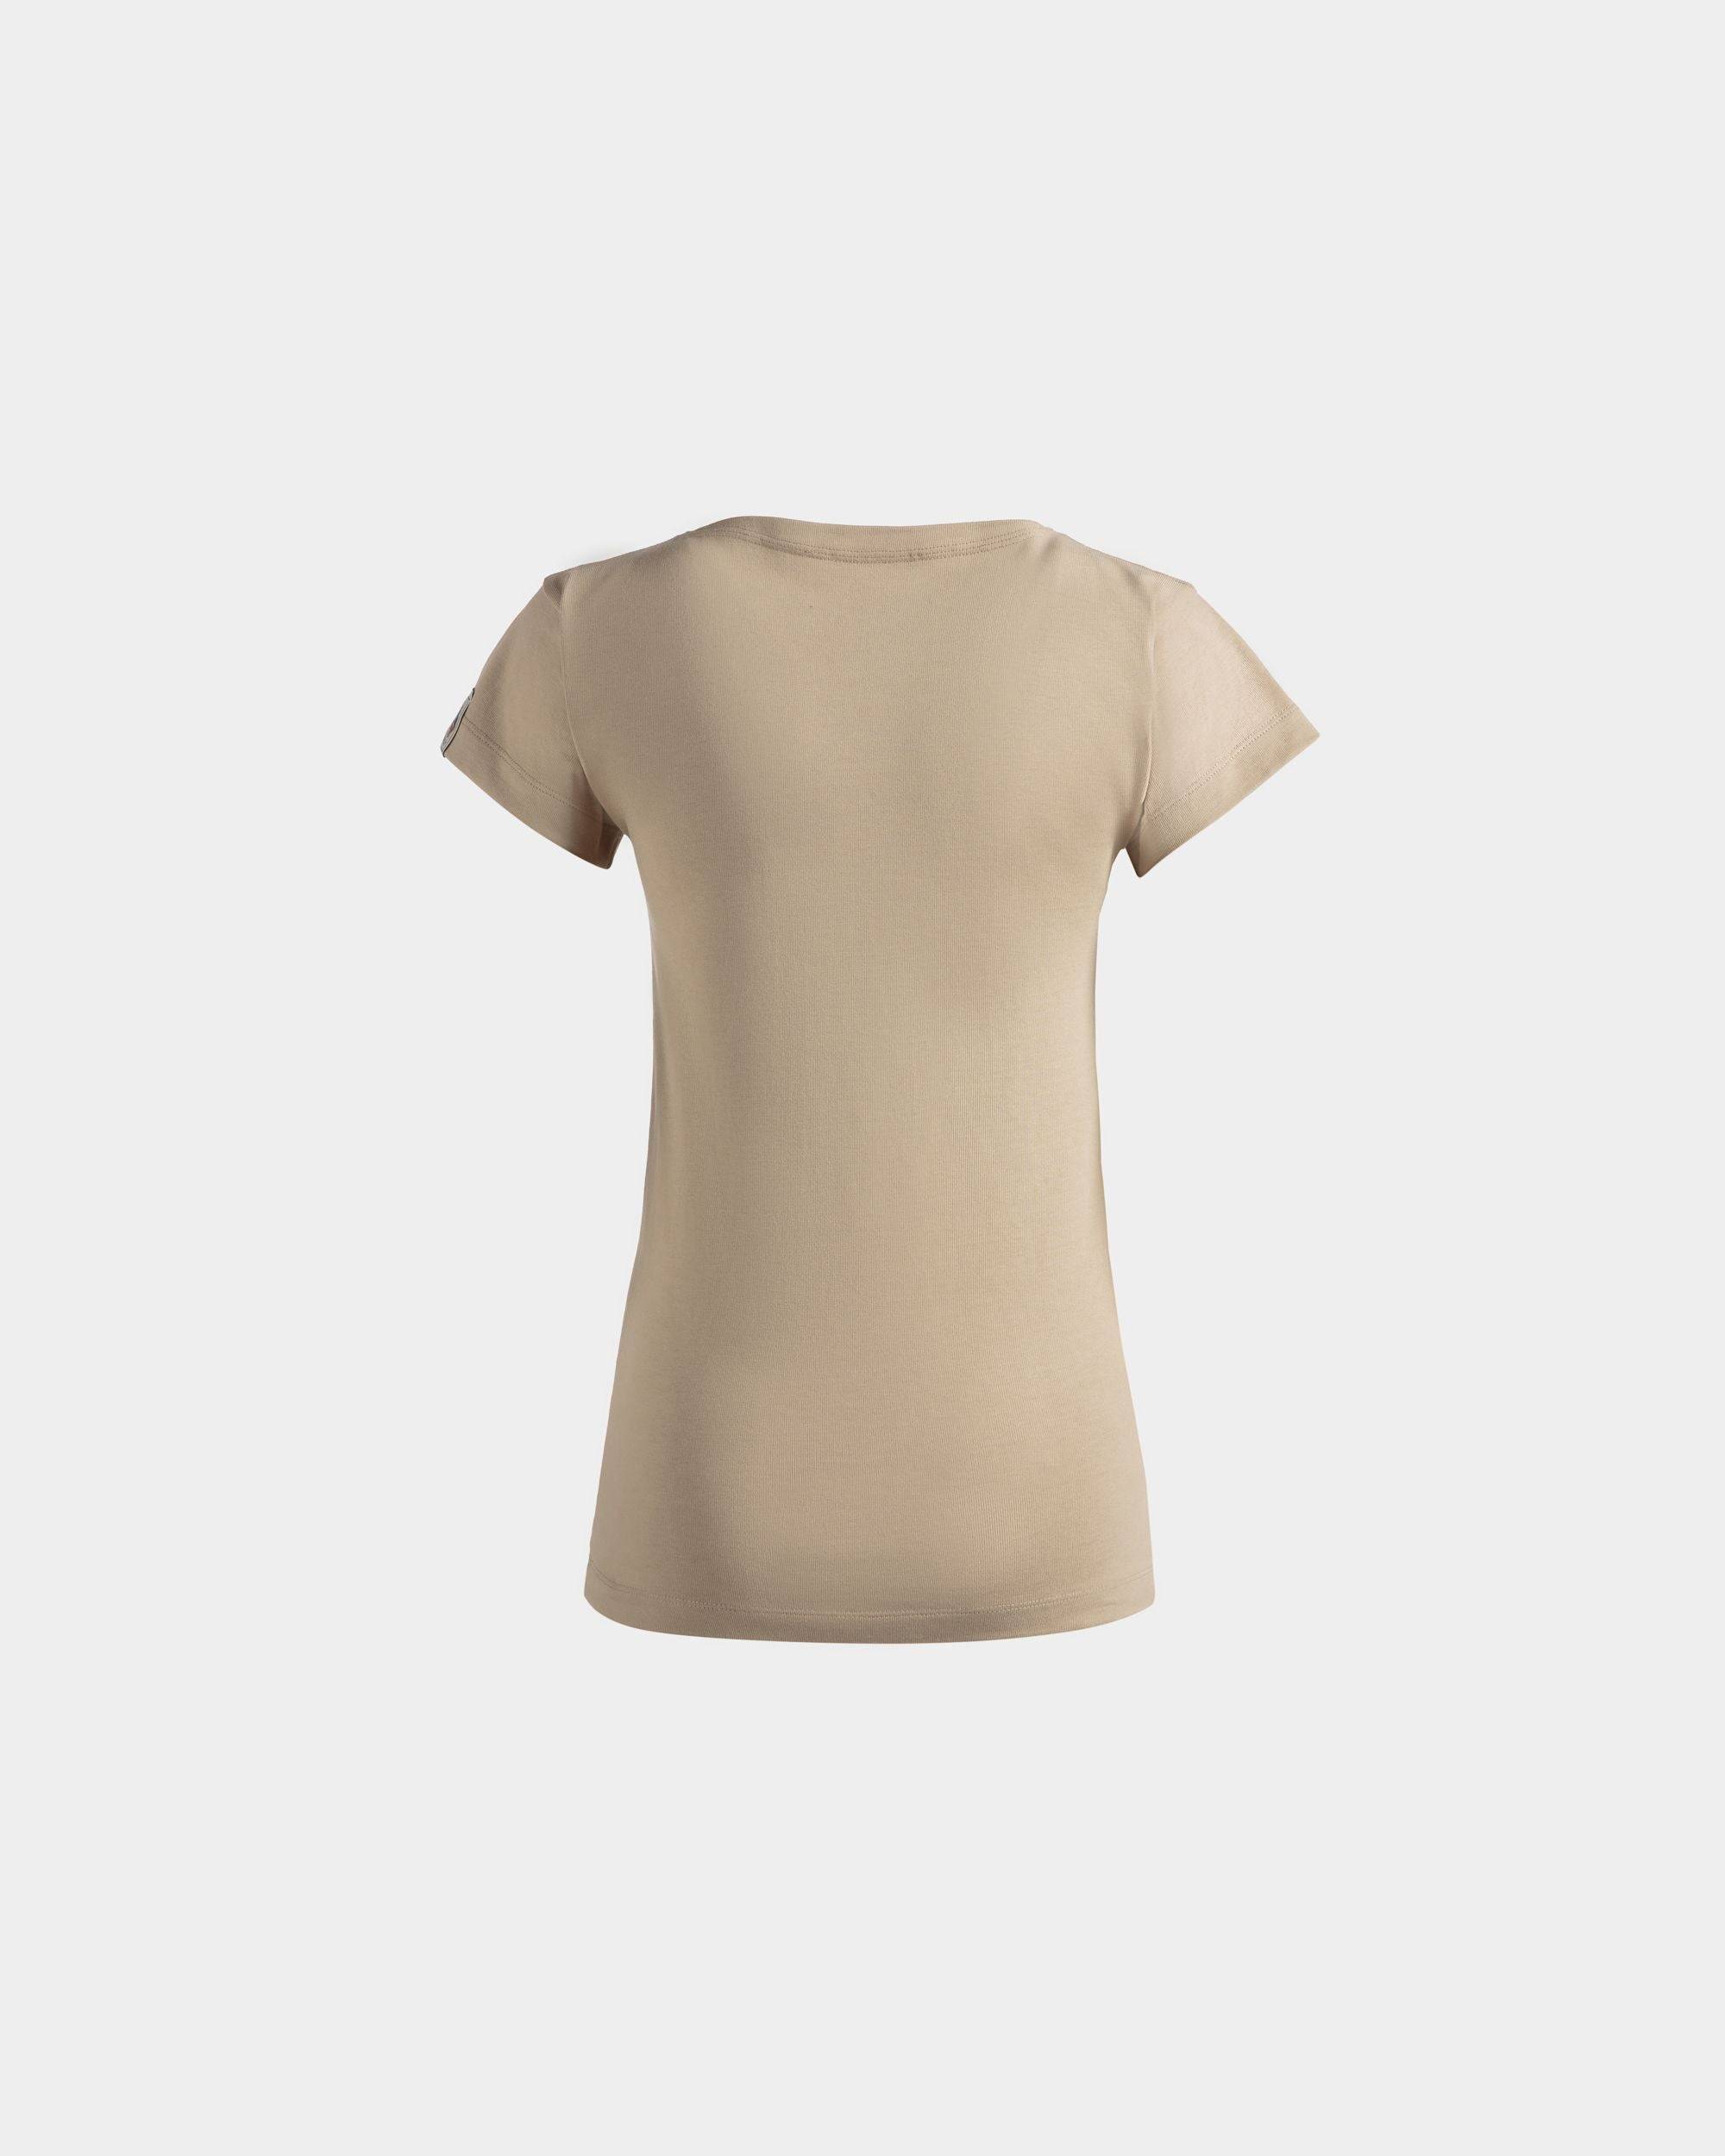 Women's T-Shirt in Beige Cotton | Bally | Still Life Back